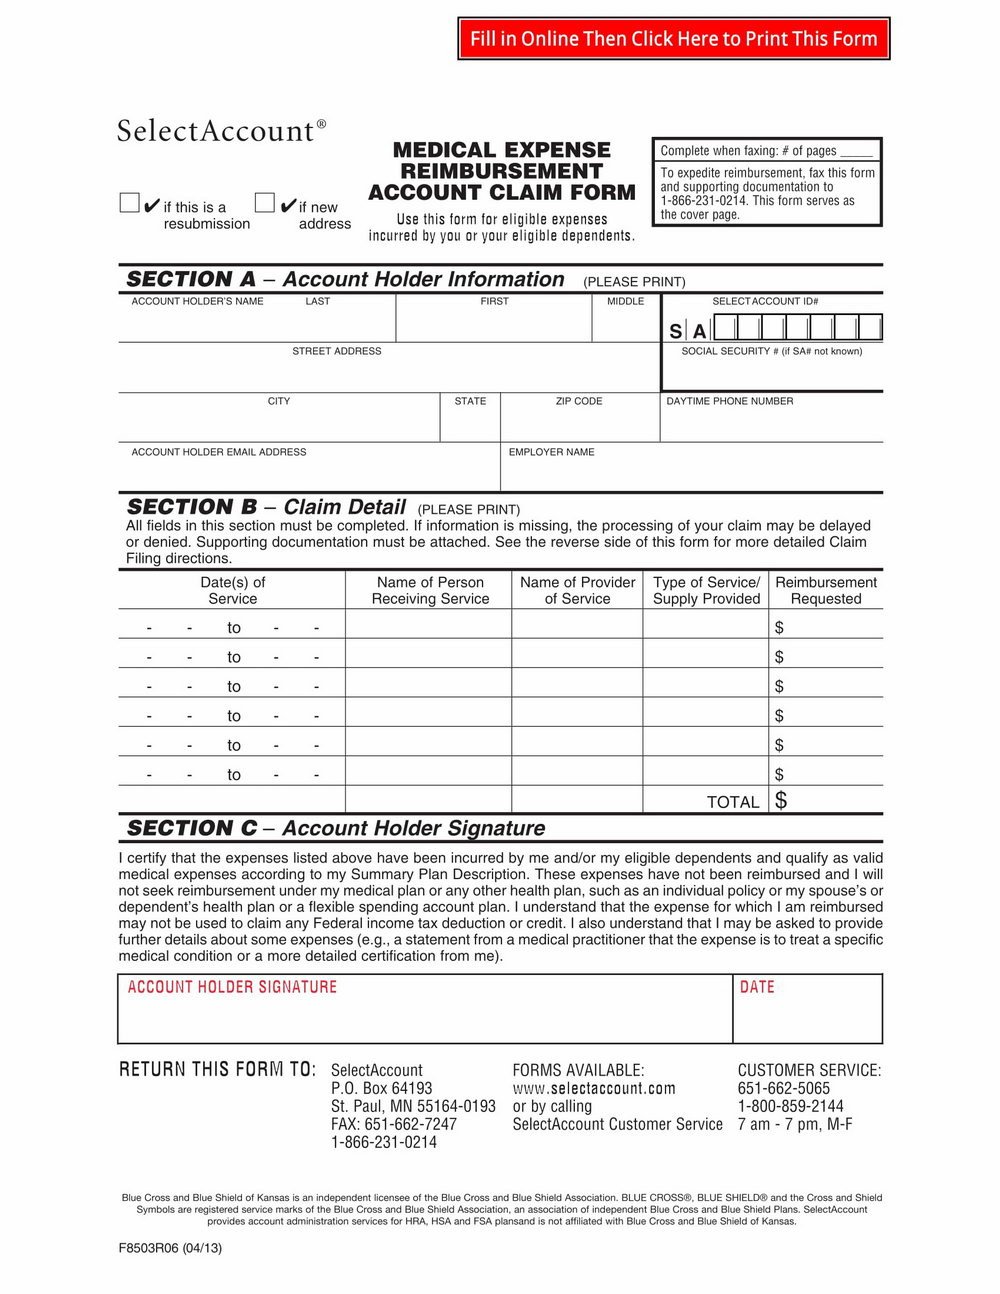 California Fmla Forms Forms 9890